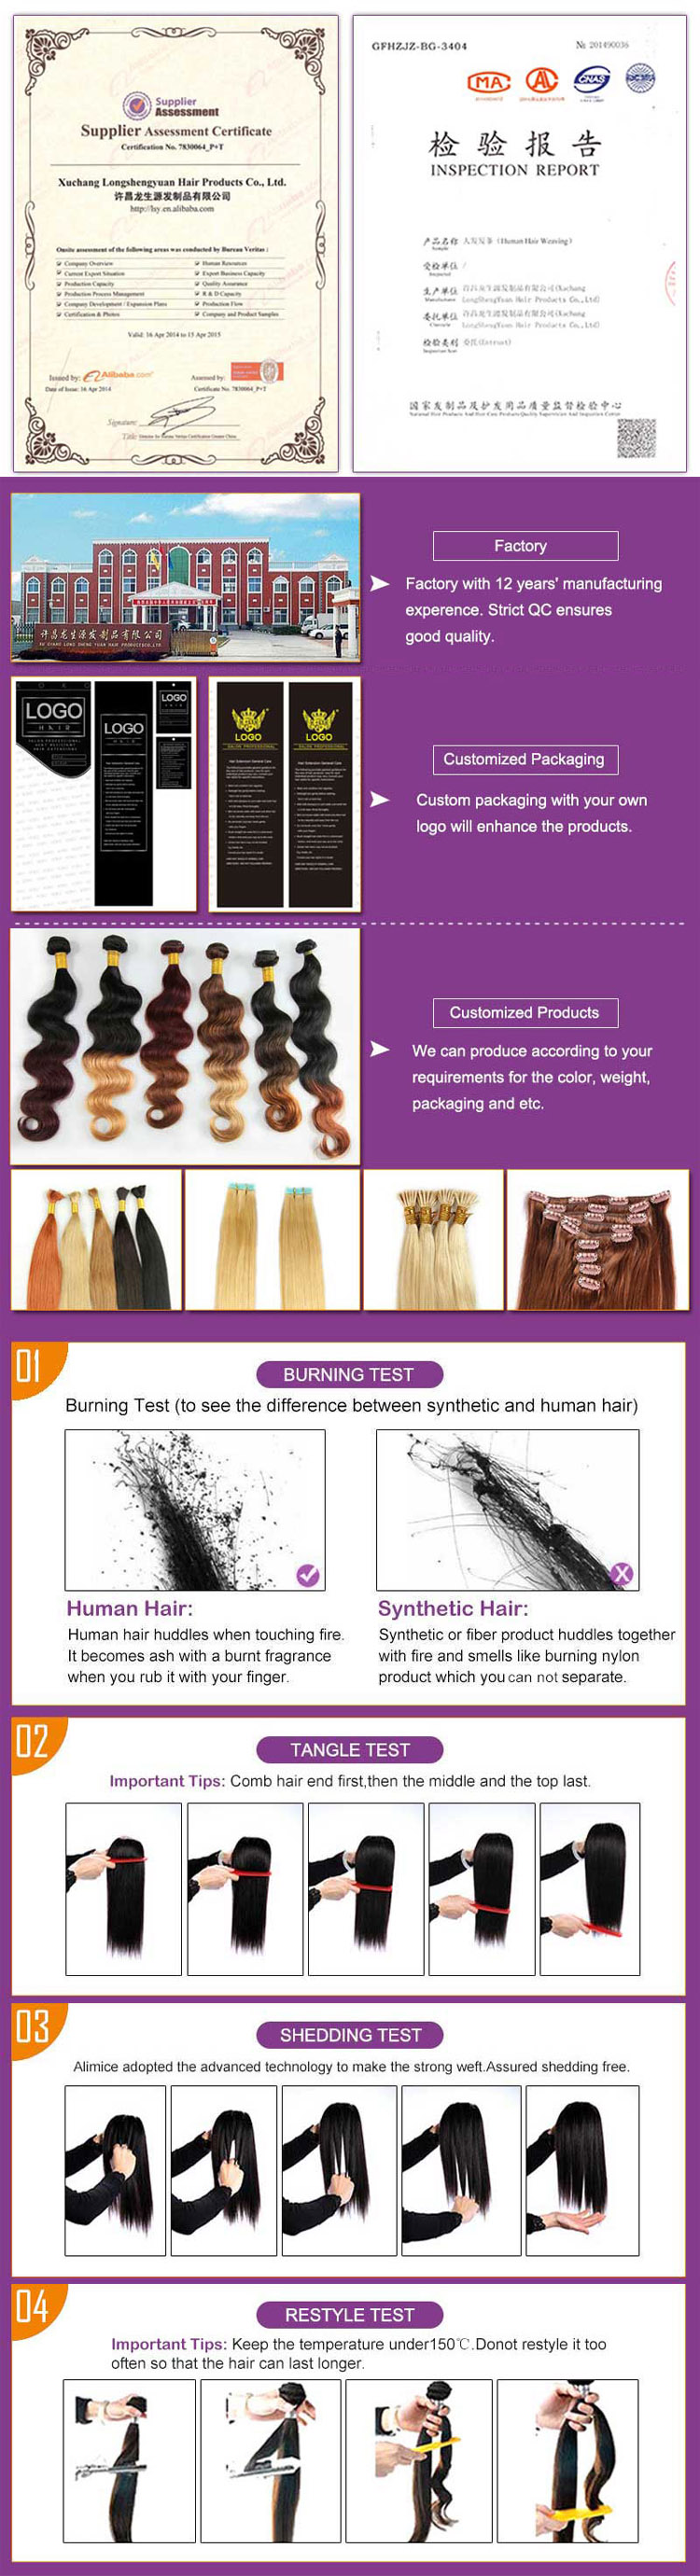 613 Blonde Ombre Color Virgin Human Hair Bundles,100% Unprocessed Virgin Cuticle Aligned 613 Brazilian Human Hair Bundles